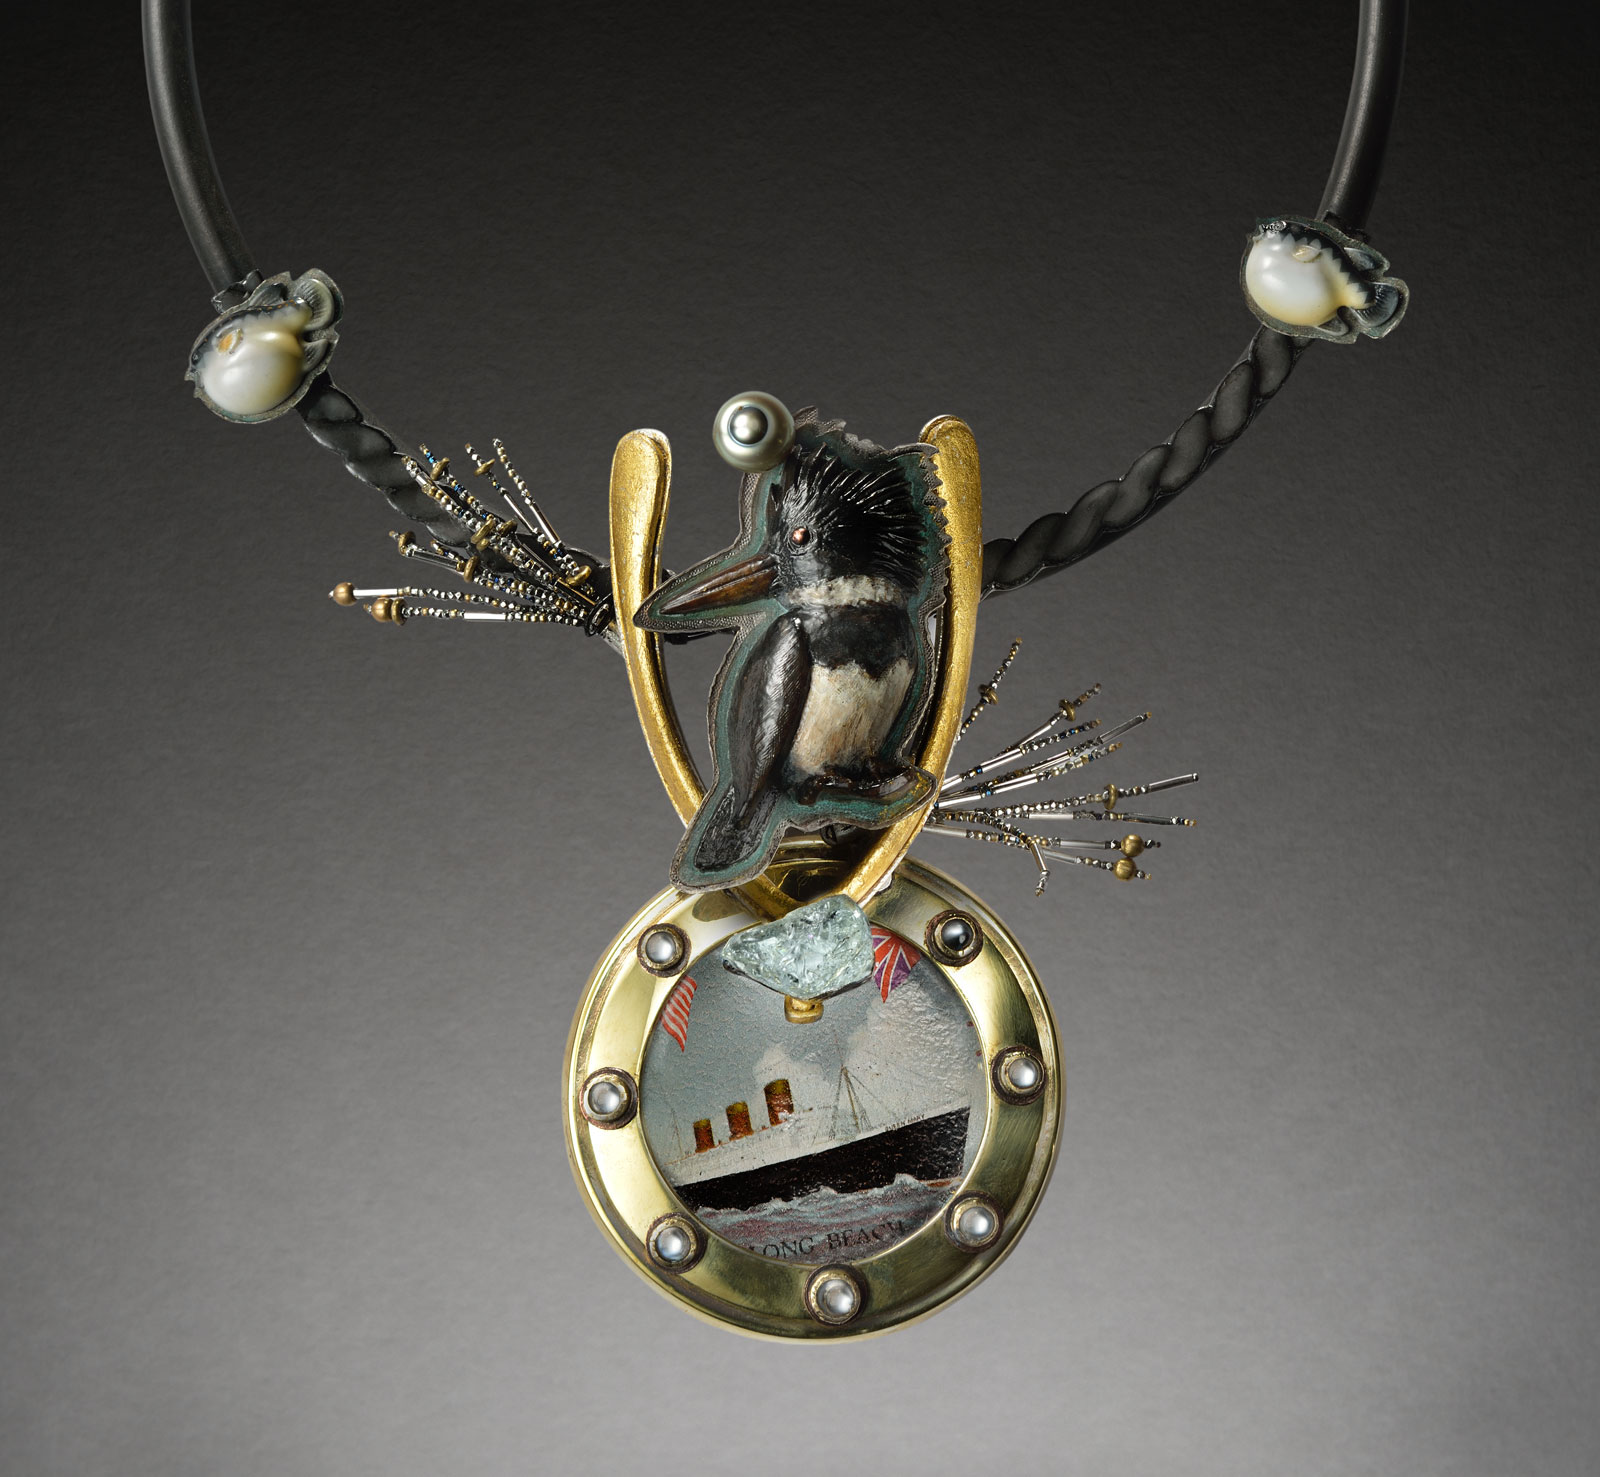 Porcelain sterling silver necklace Ceramic charm necklace Porcelain pendant Gift necklace for women Abstract necklace Summer lemon necklace